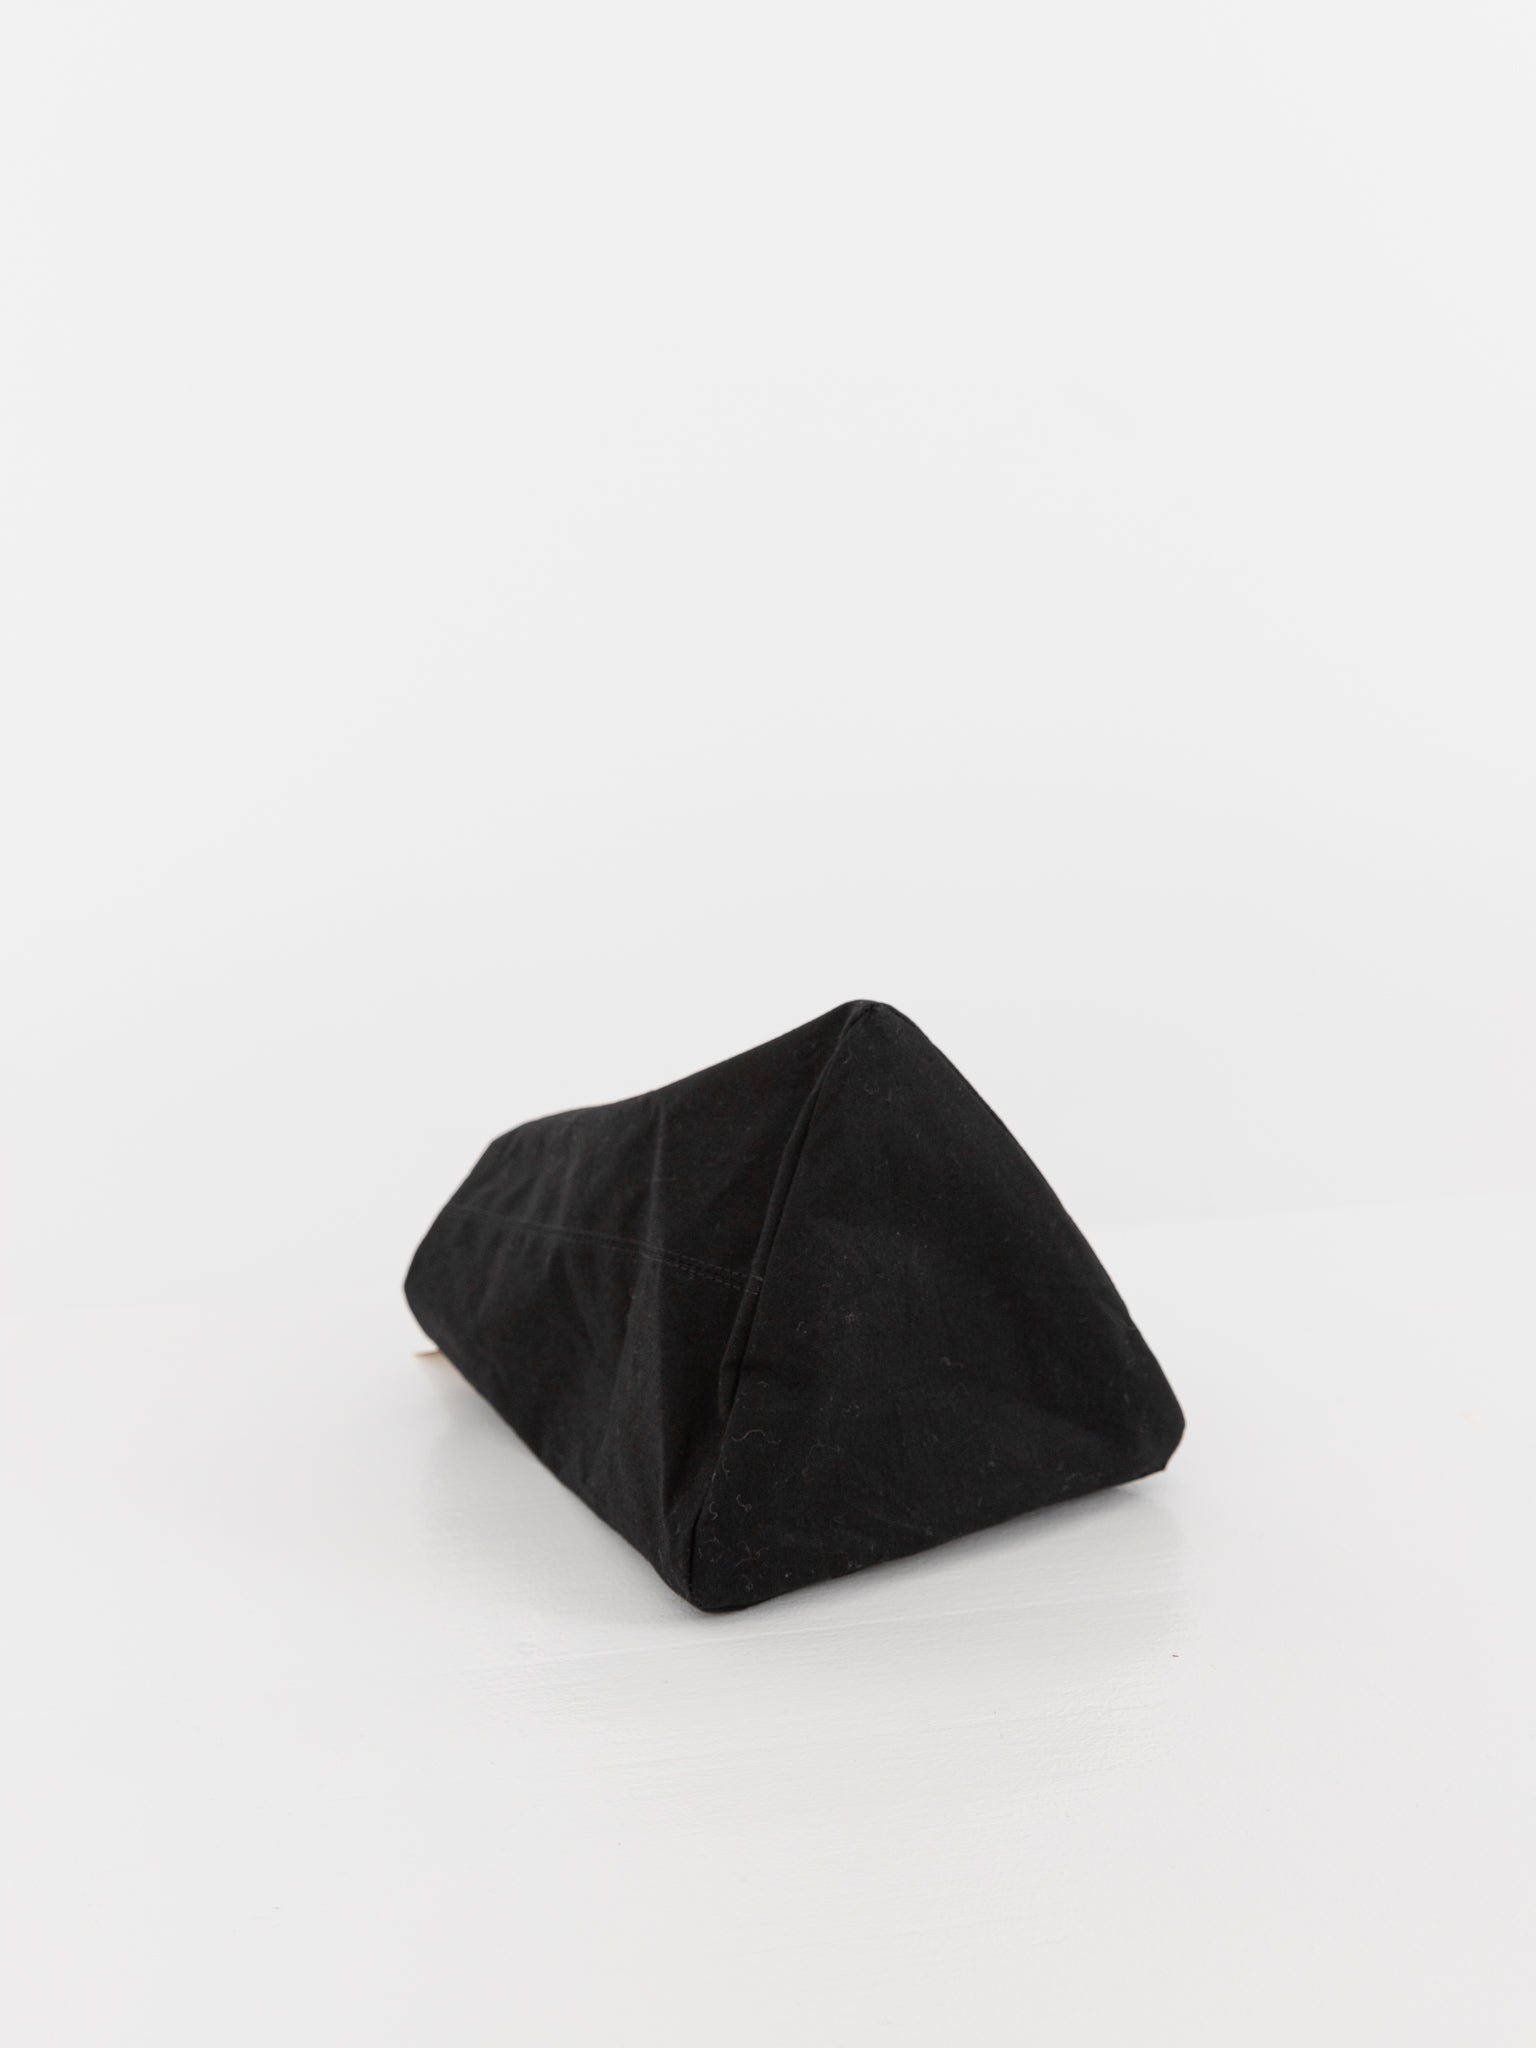 Studio Kettle Pint Bag, Black - Worthwhile